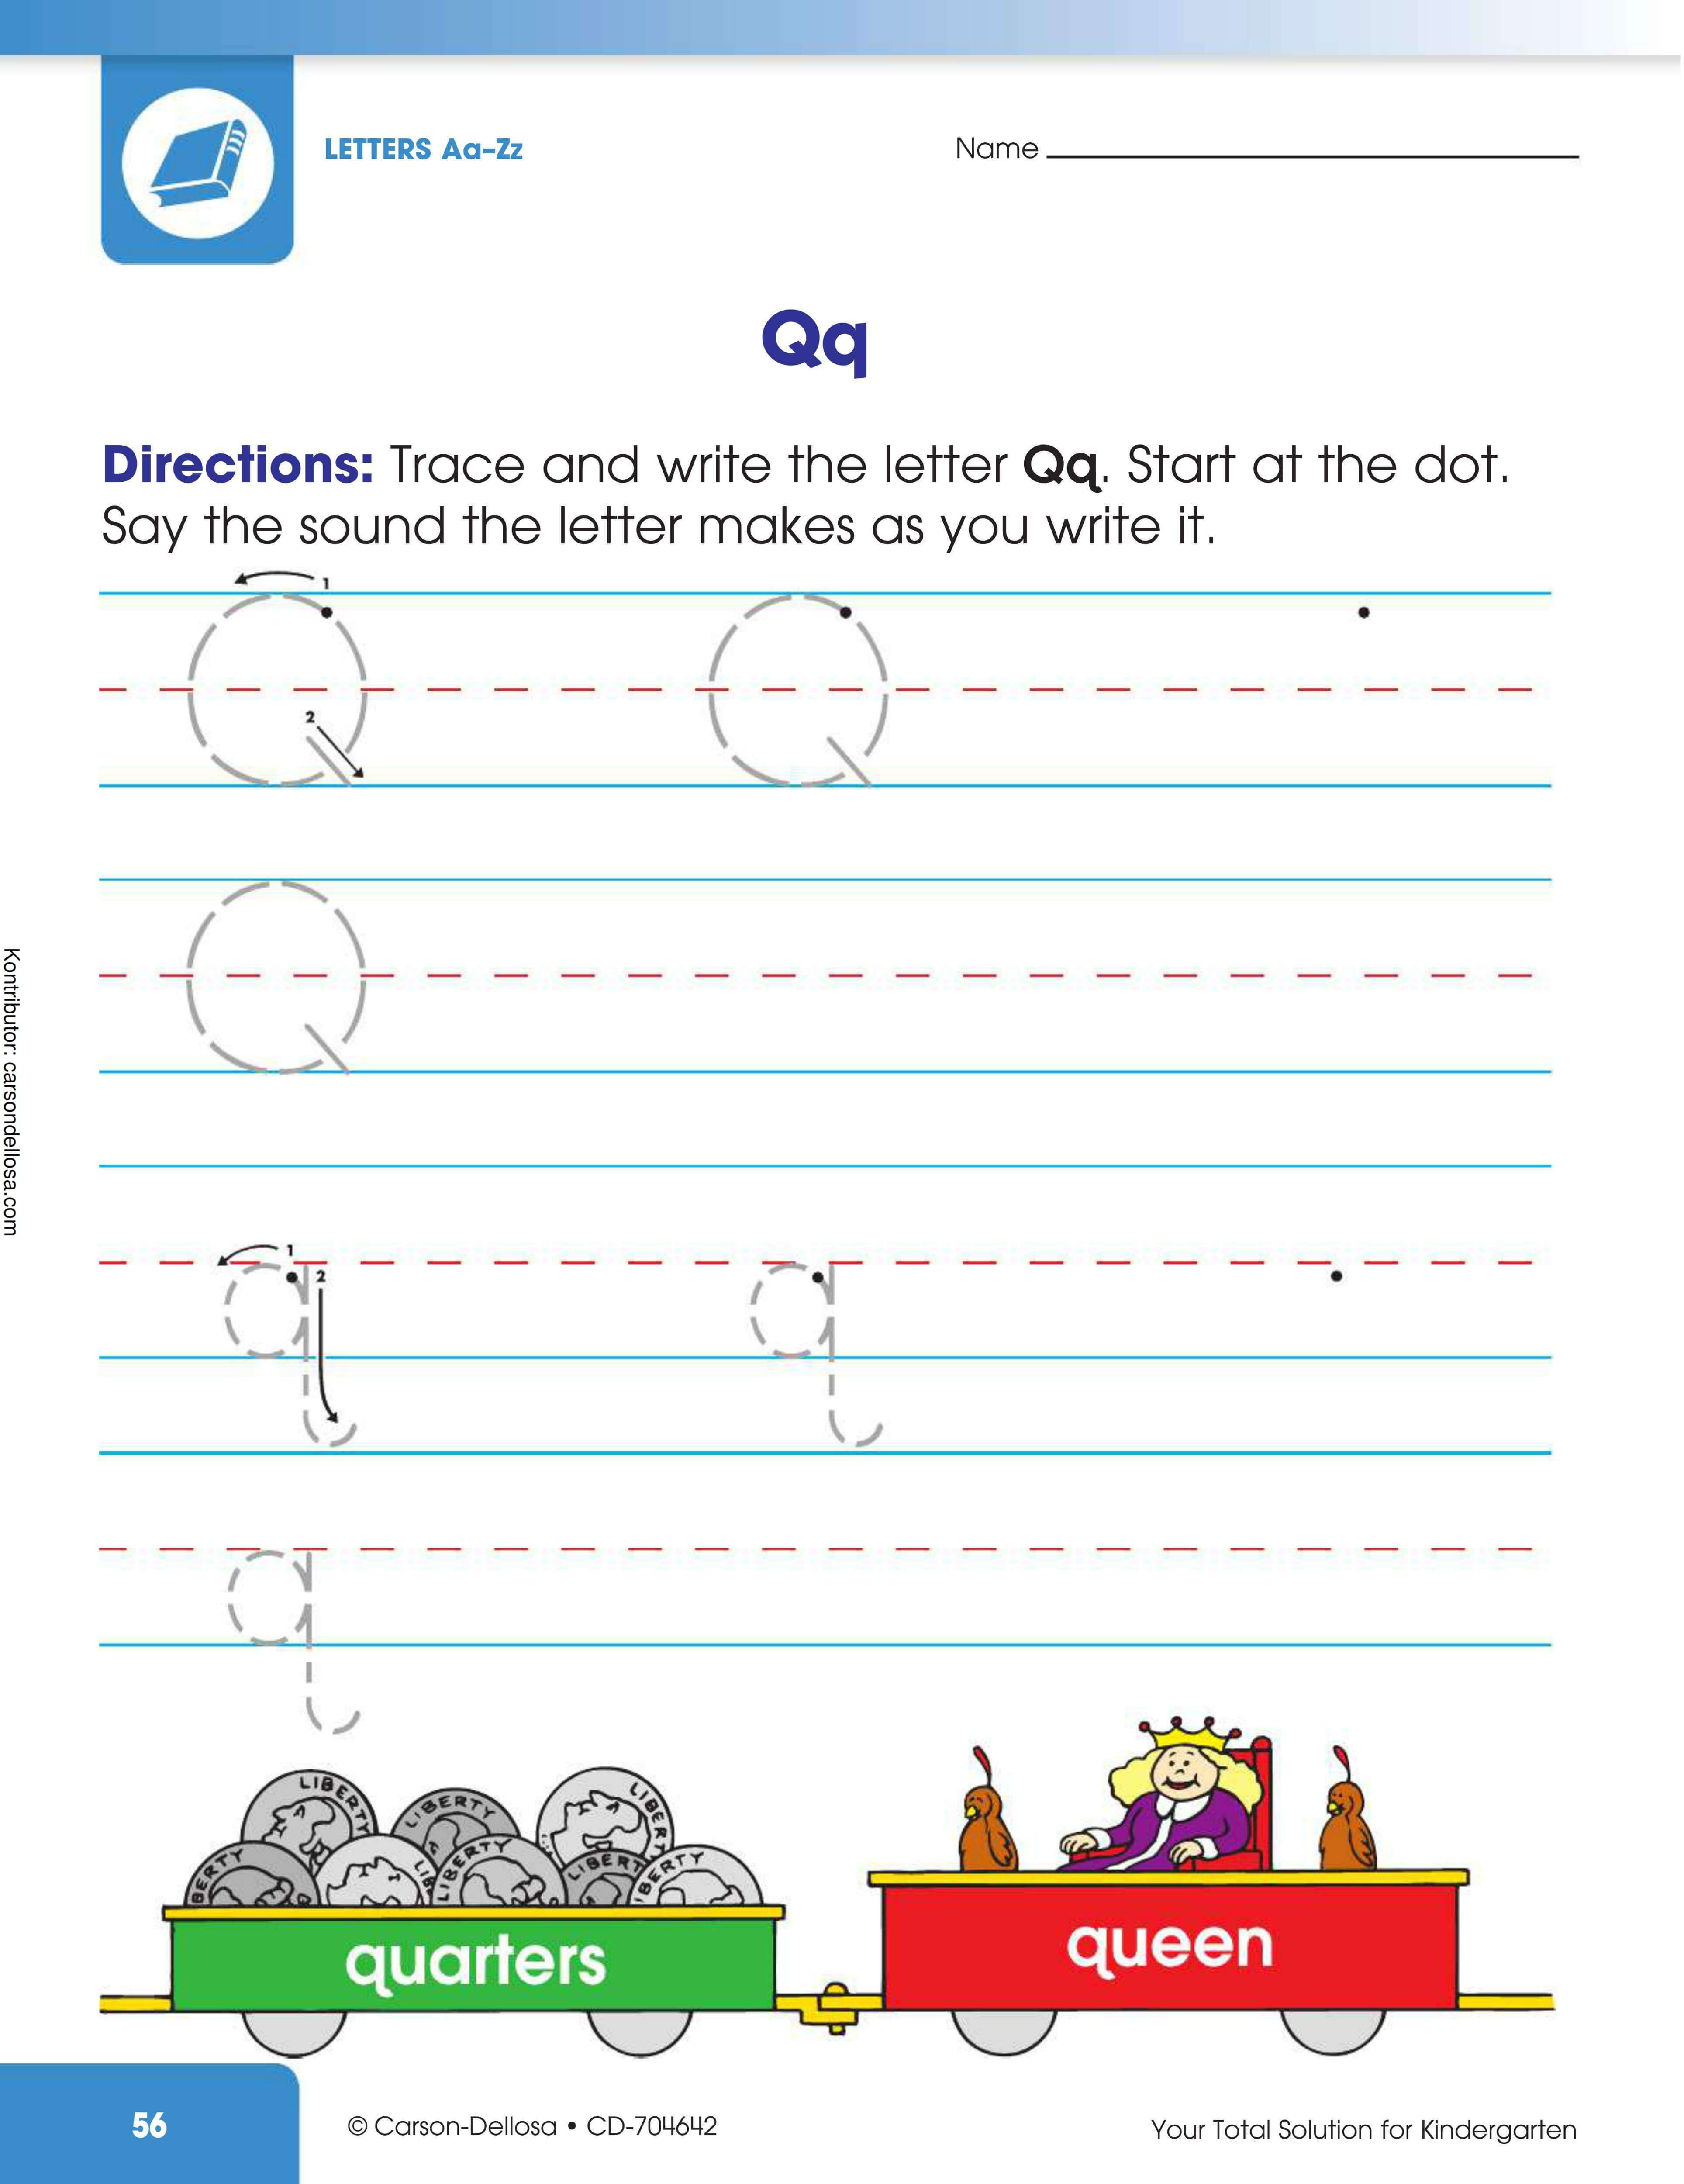 Belajar Mengenal dan Menulis Huruf "Q" Besar dan "q" Kecil